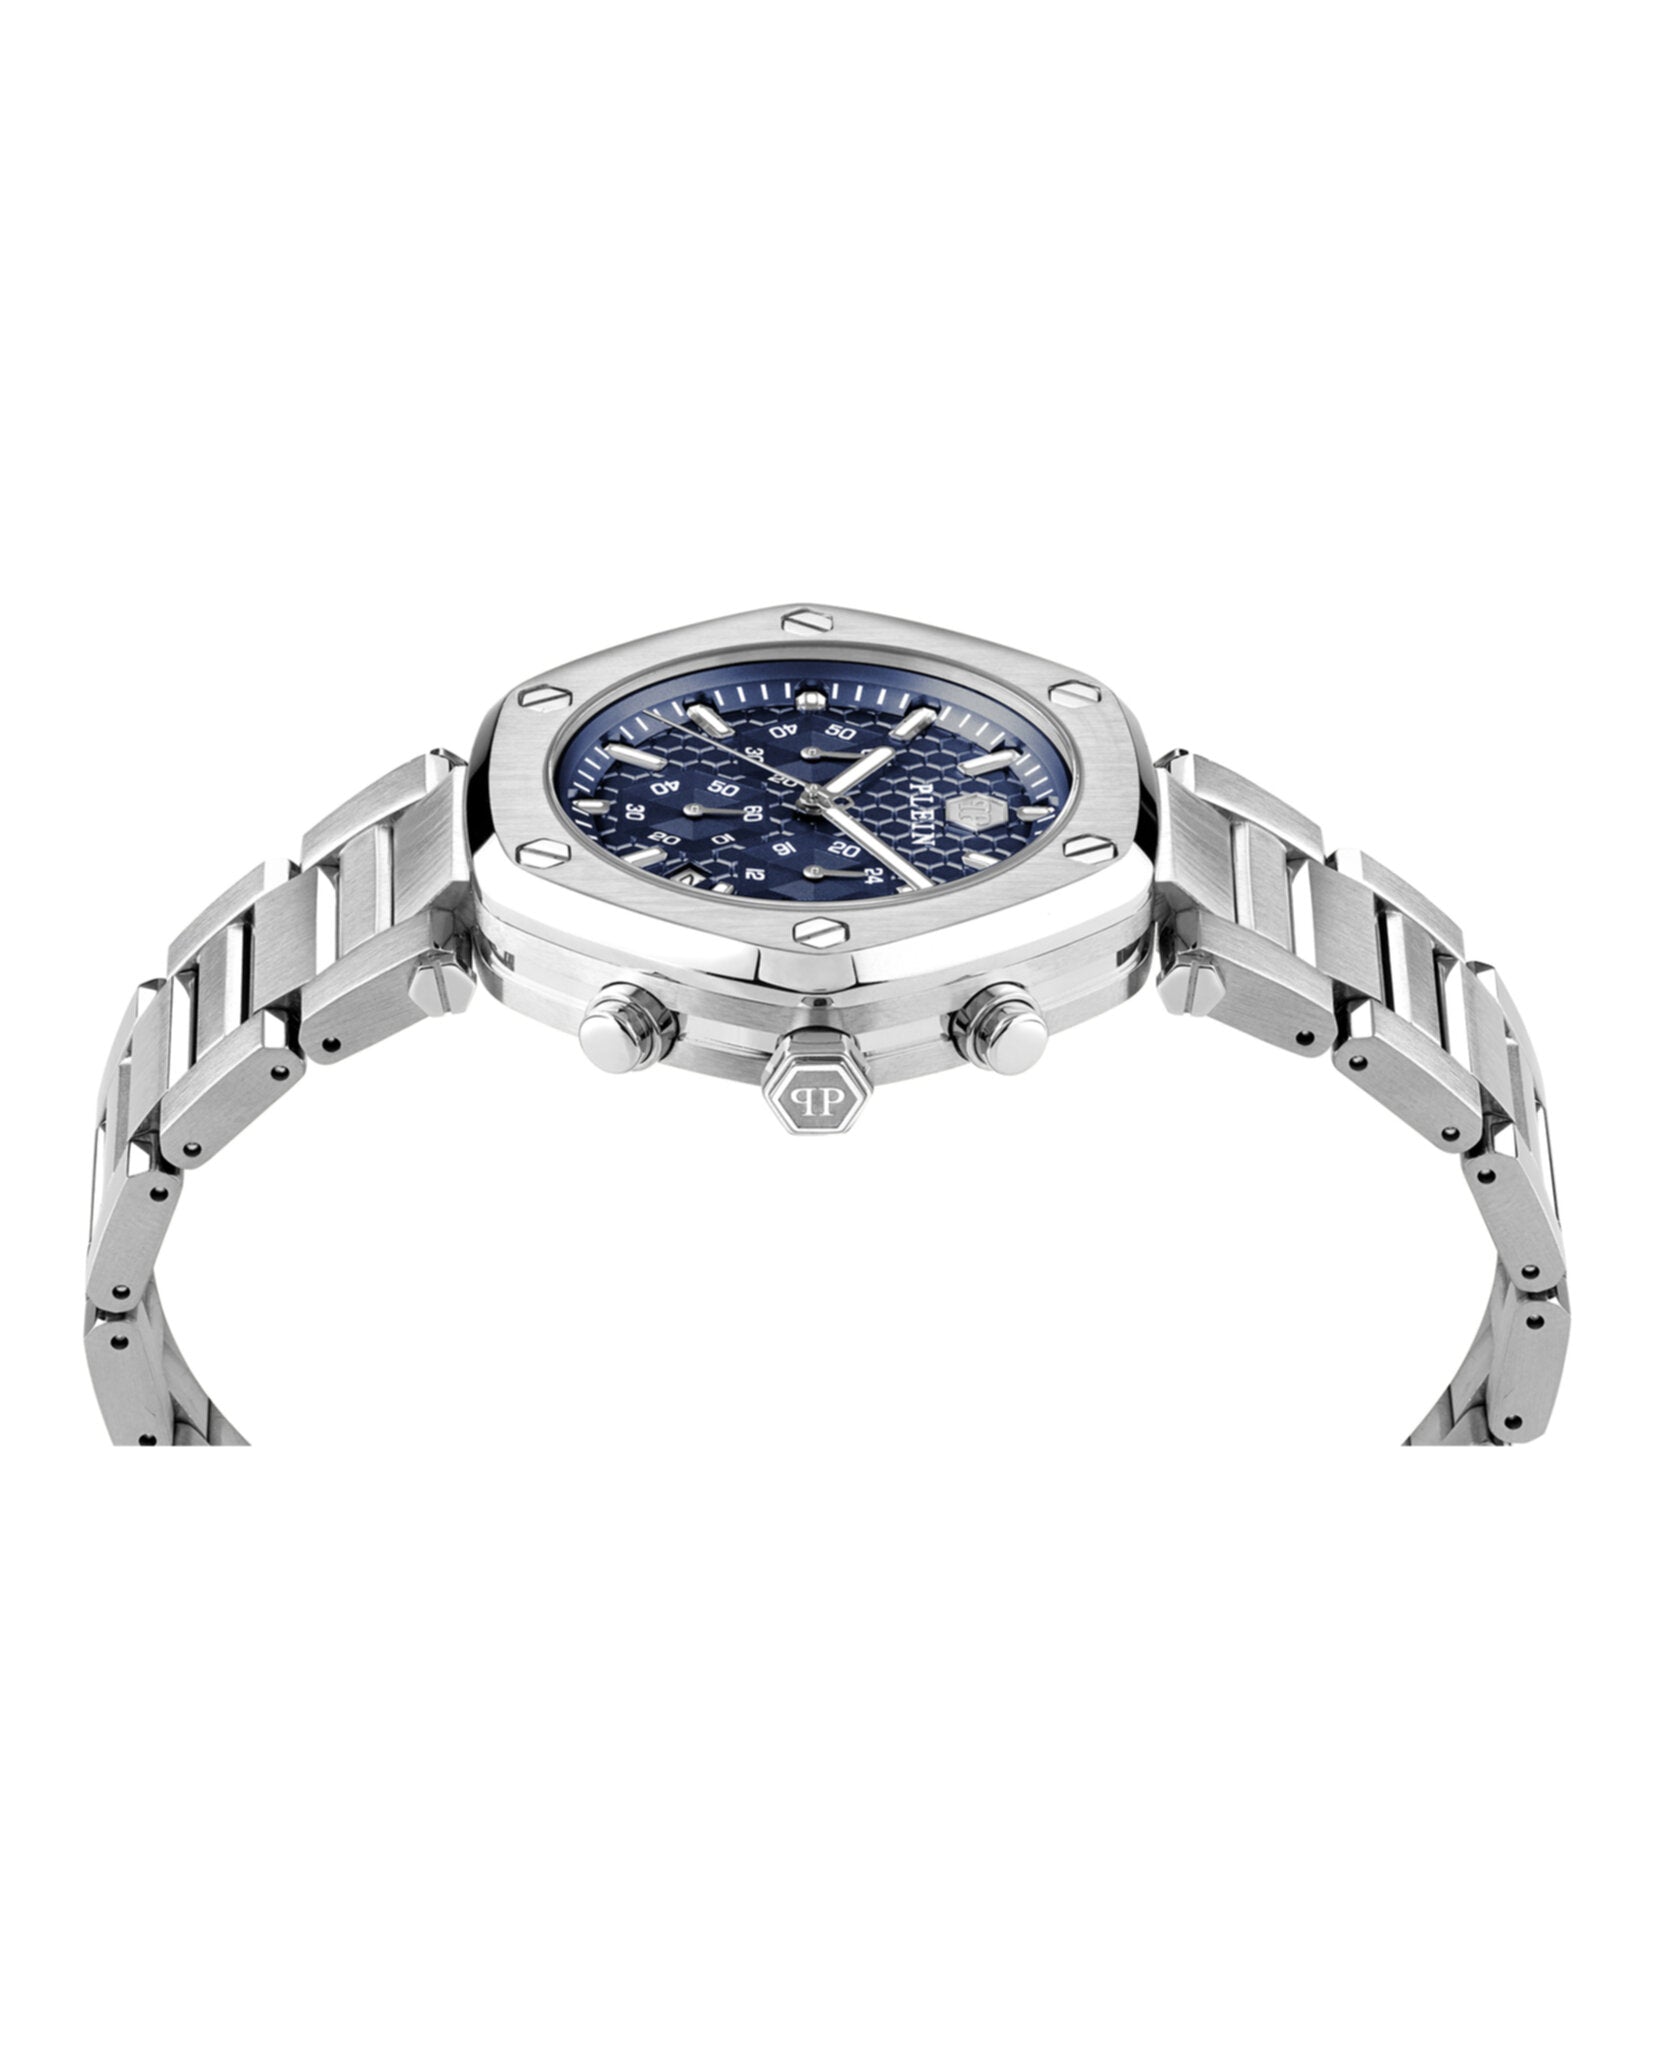 The Hexagon Chrono Bracelet Watch